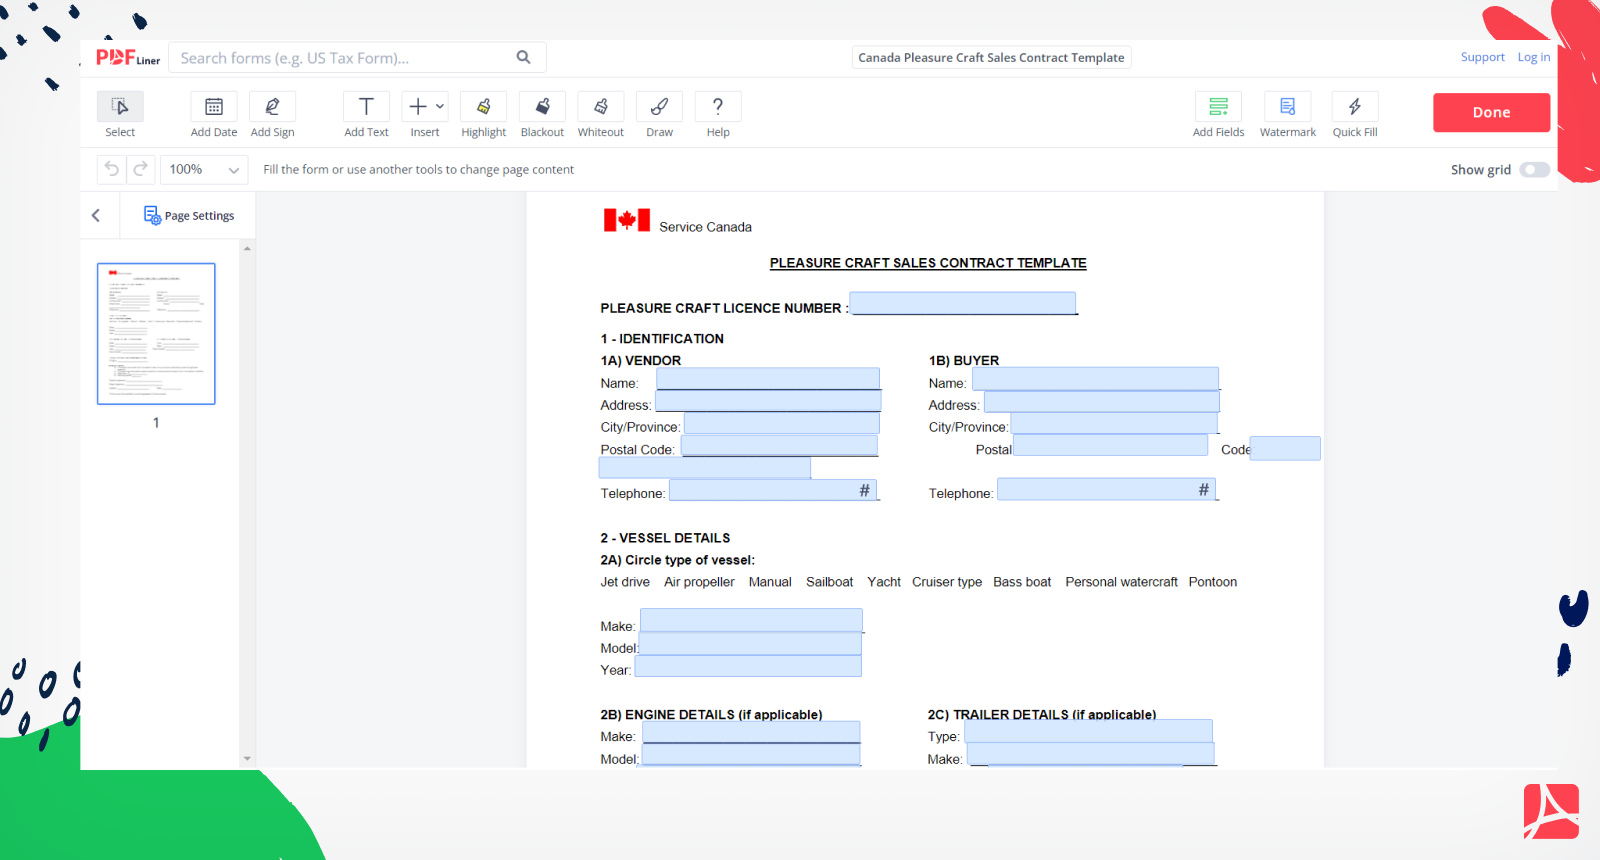 Canada Pleasure Craft Sales Contract Template Screenshot